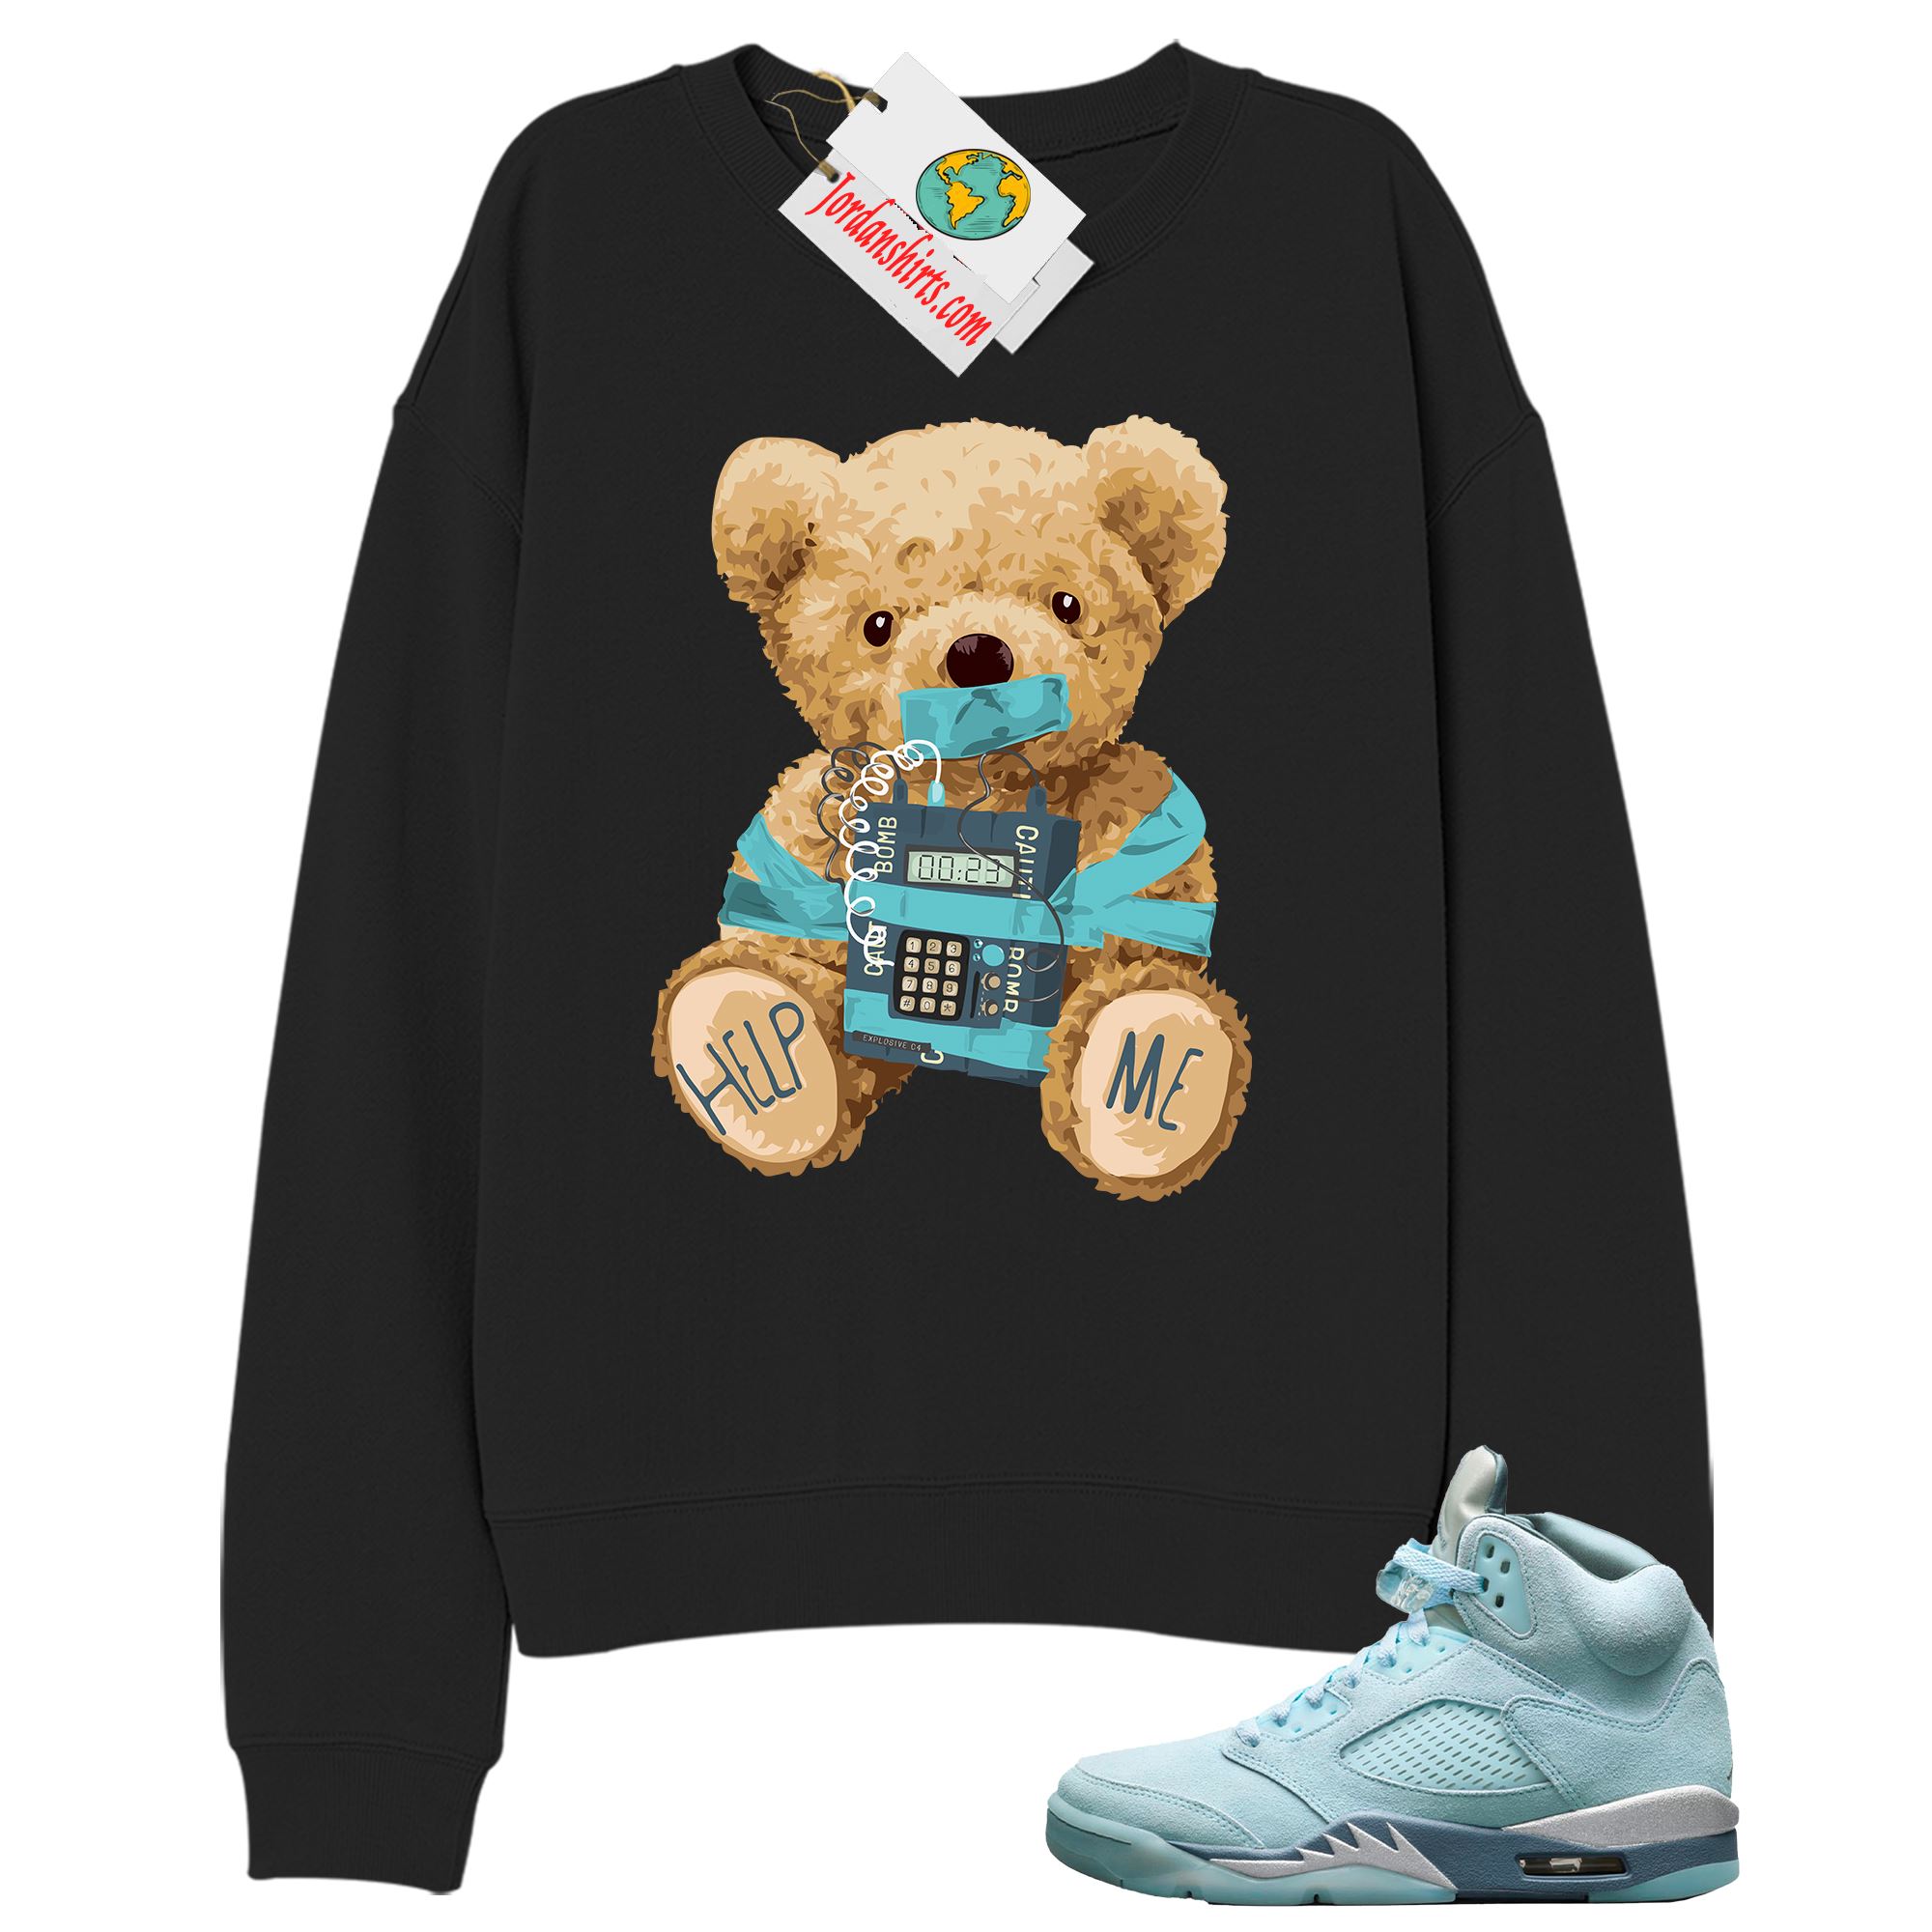 Jordan 5 Sweatshirt, Teddy Bear Bomb Black Sweatshirt Air Jordan 5 Bluebird 5s Size Up To 5xl